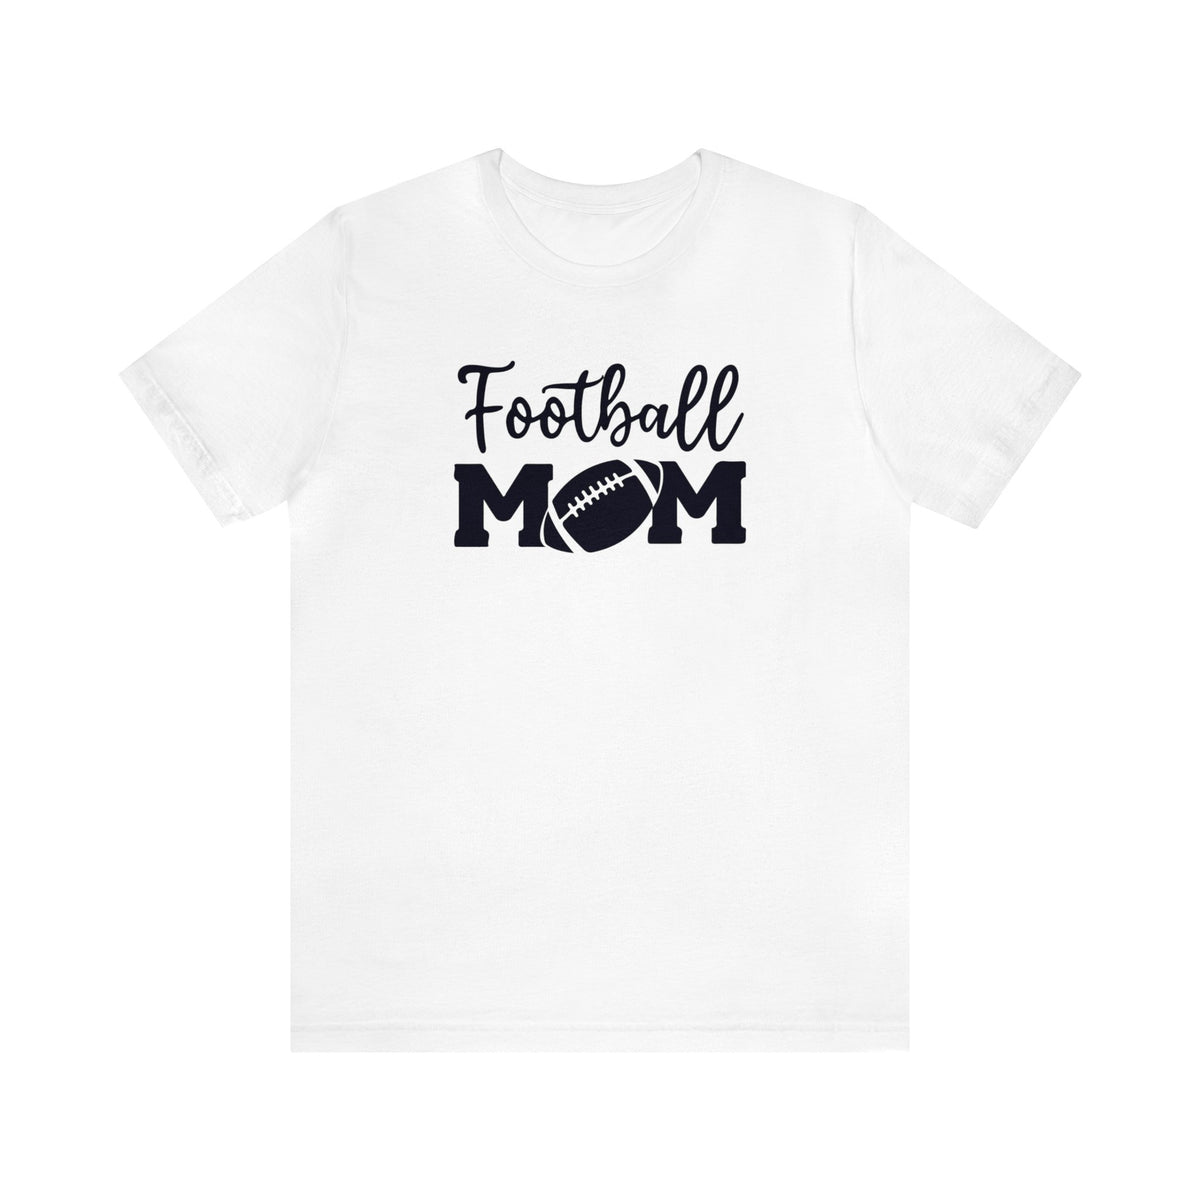 Football Mom Shirt | Football Mom Gift